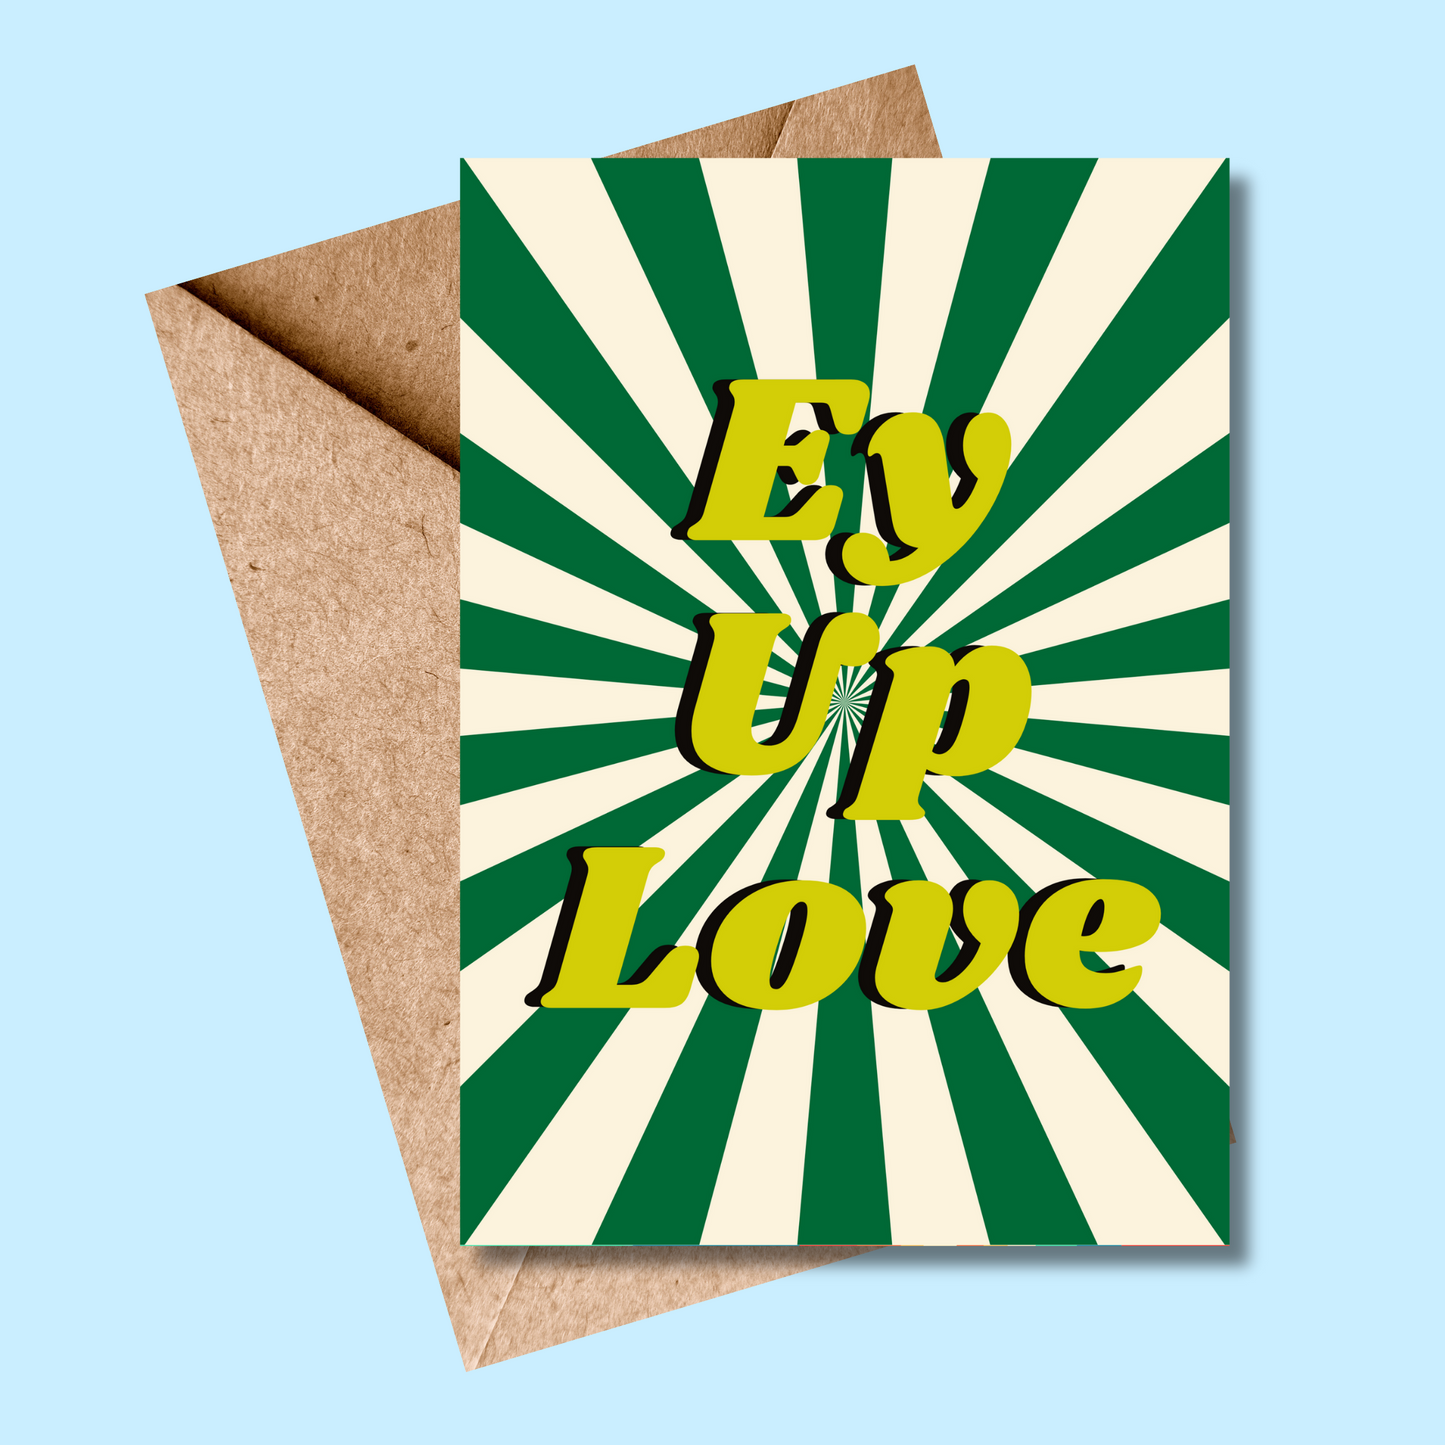 Ey Up Love (5x7” print/card)